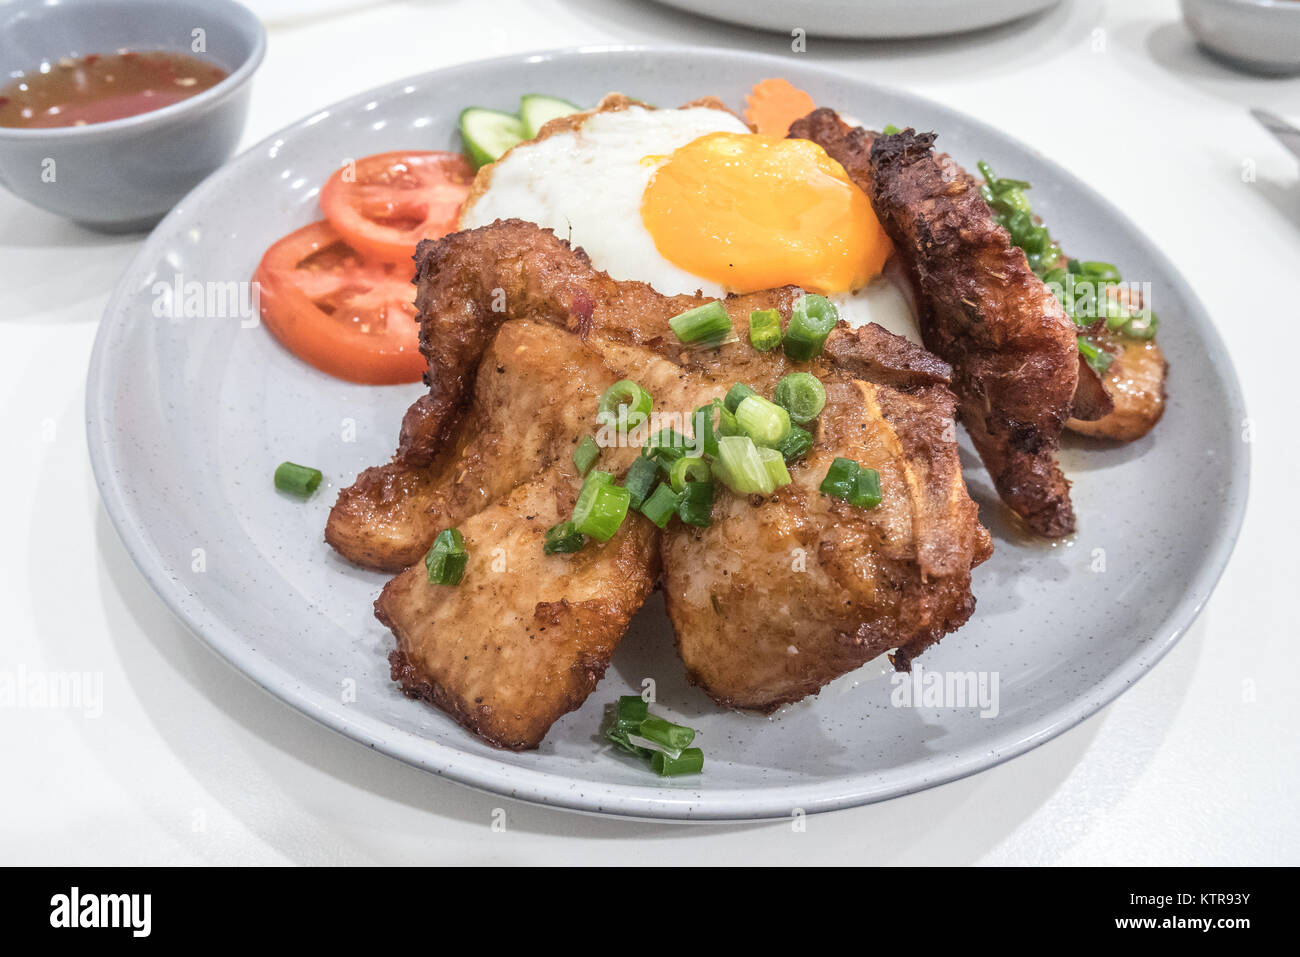 grill pork chop on rice vietnamemse cuisine Stock Photo